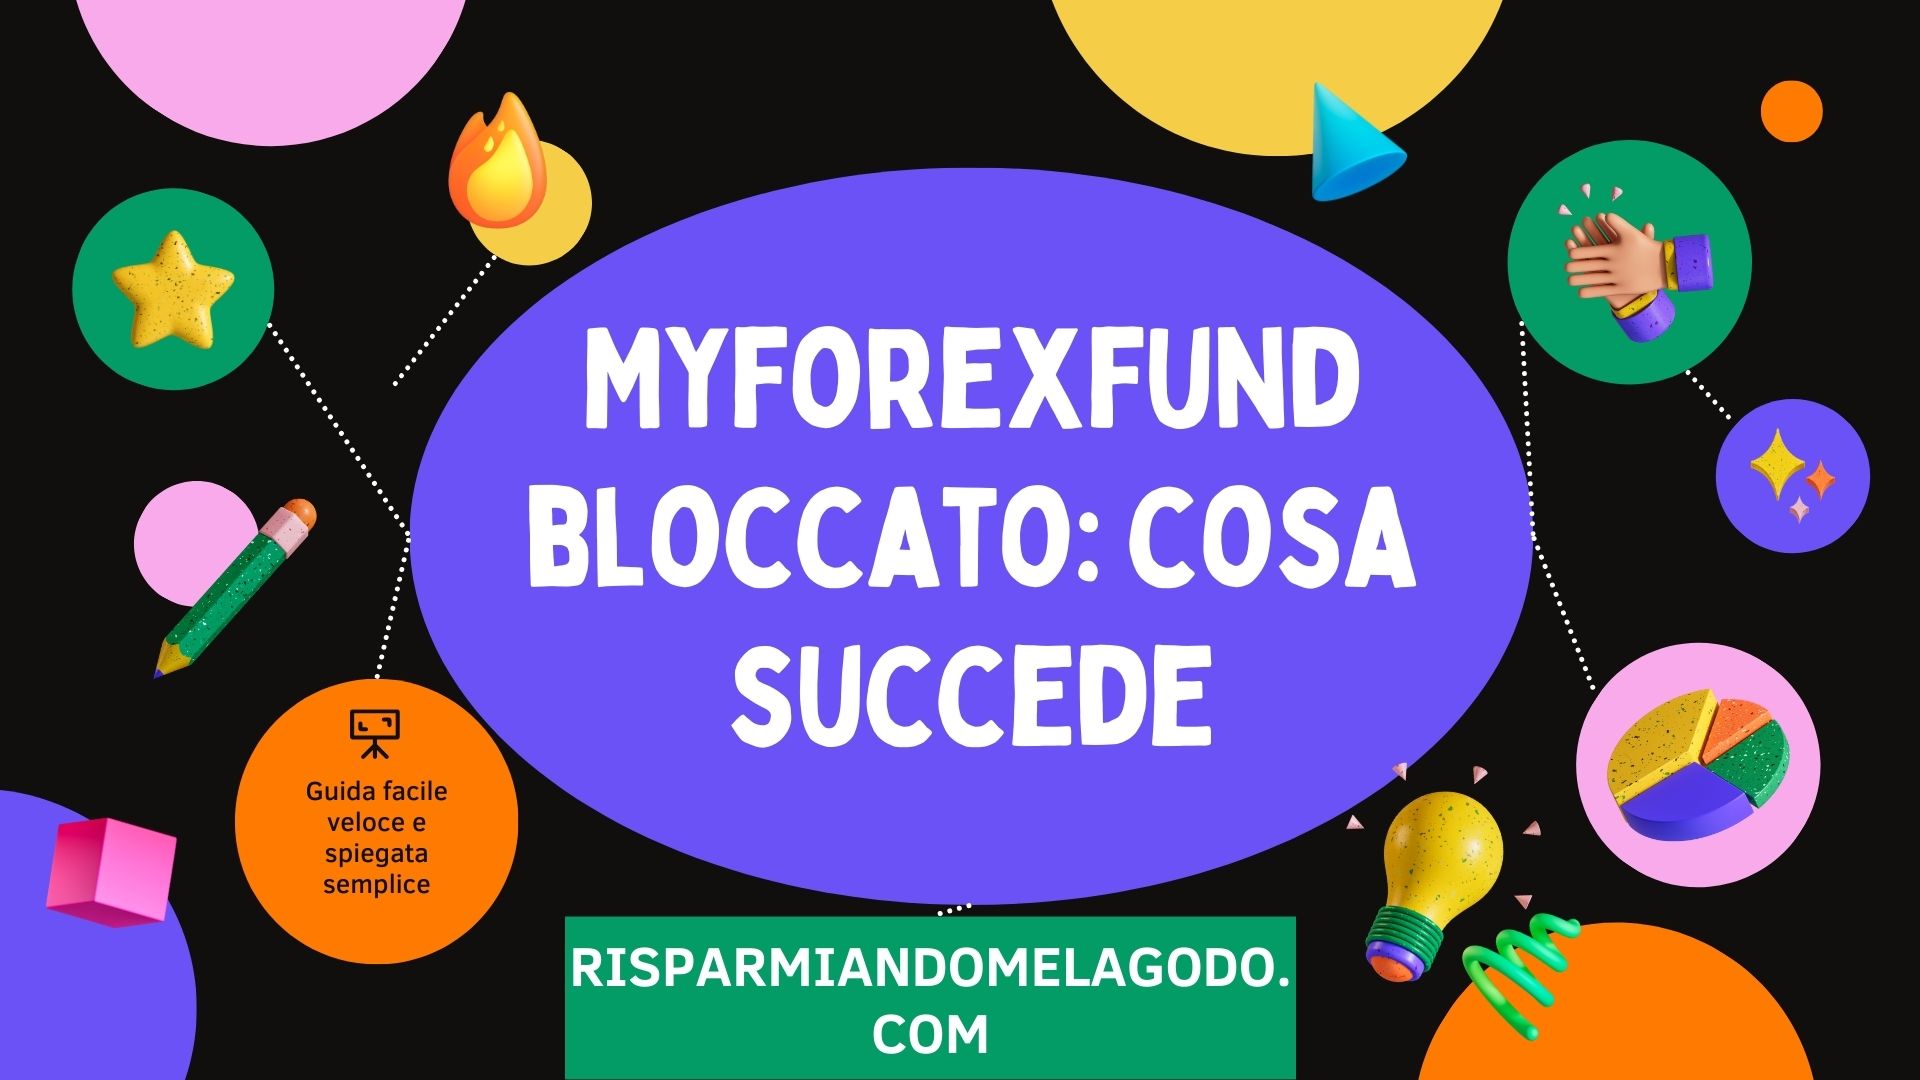 Myforexfund bloccato: cosa succede